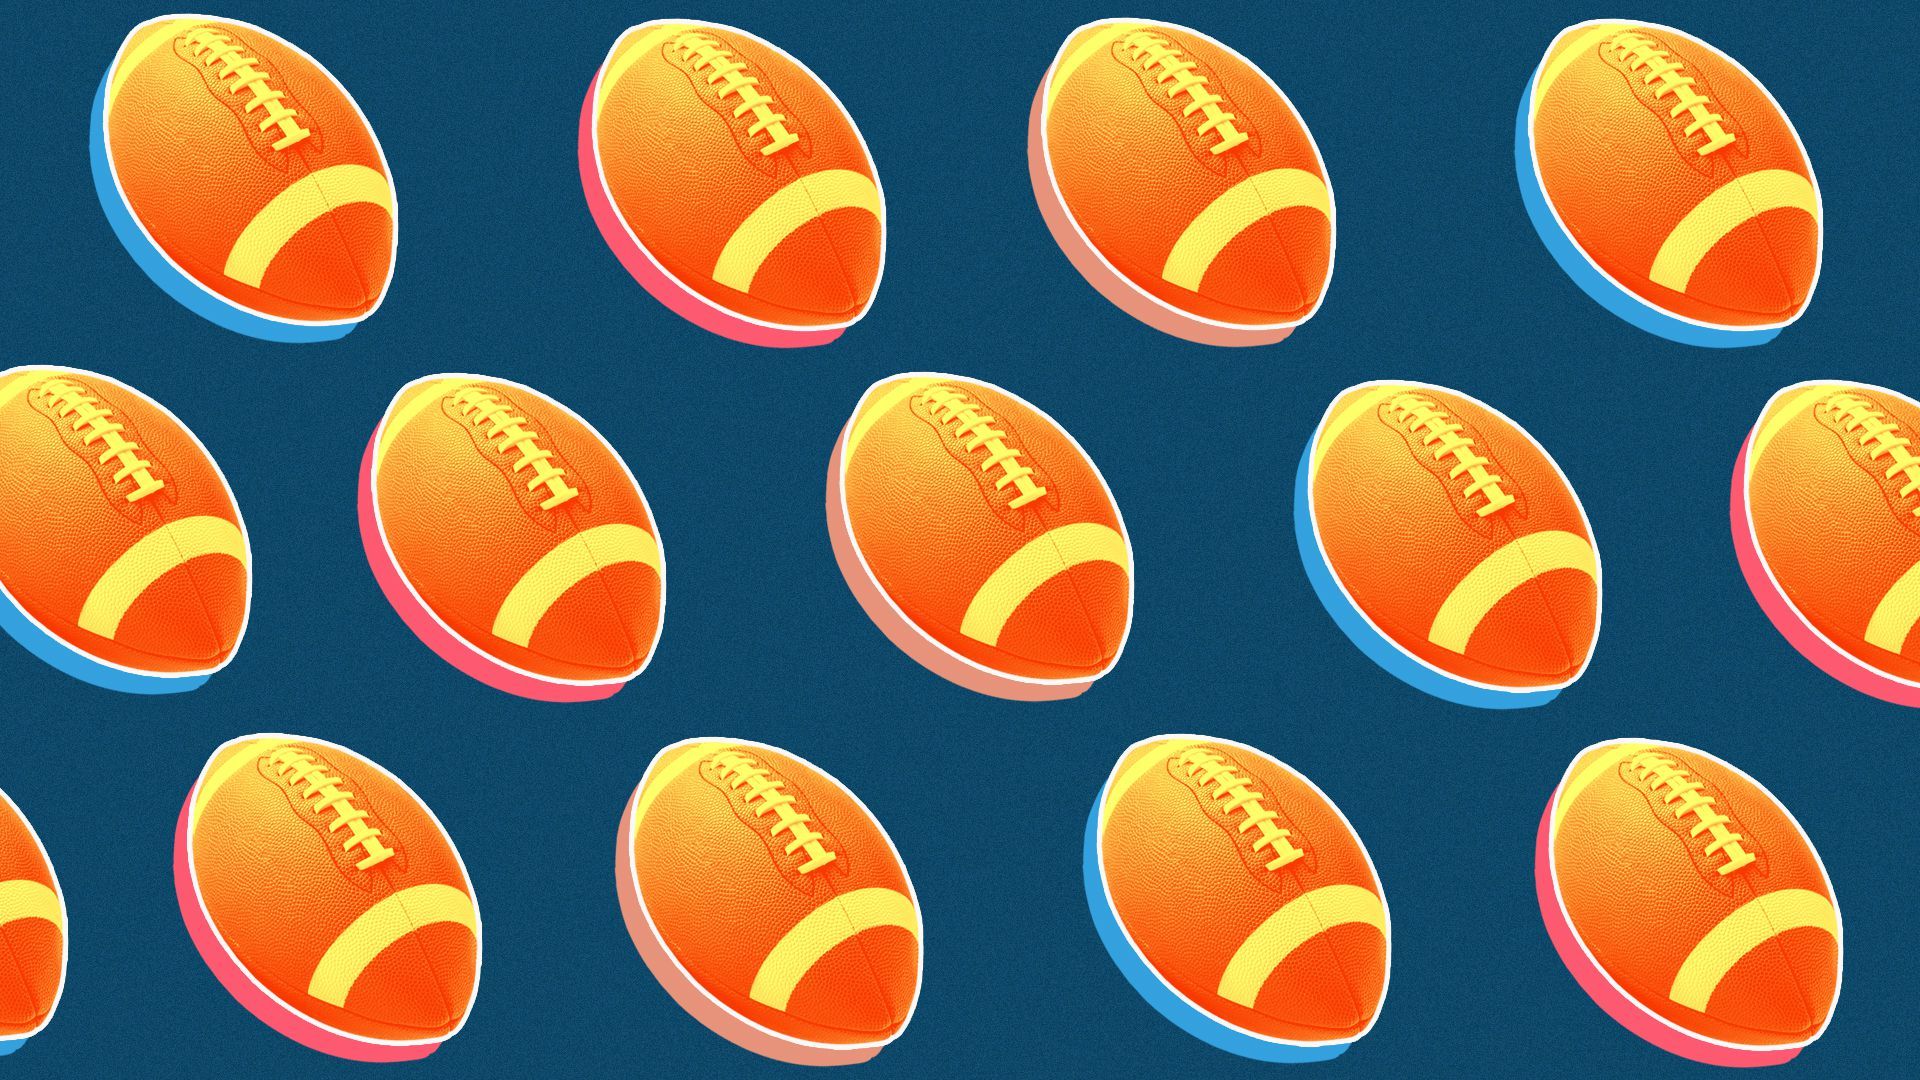 Illustrated pattern of footballs